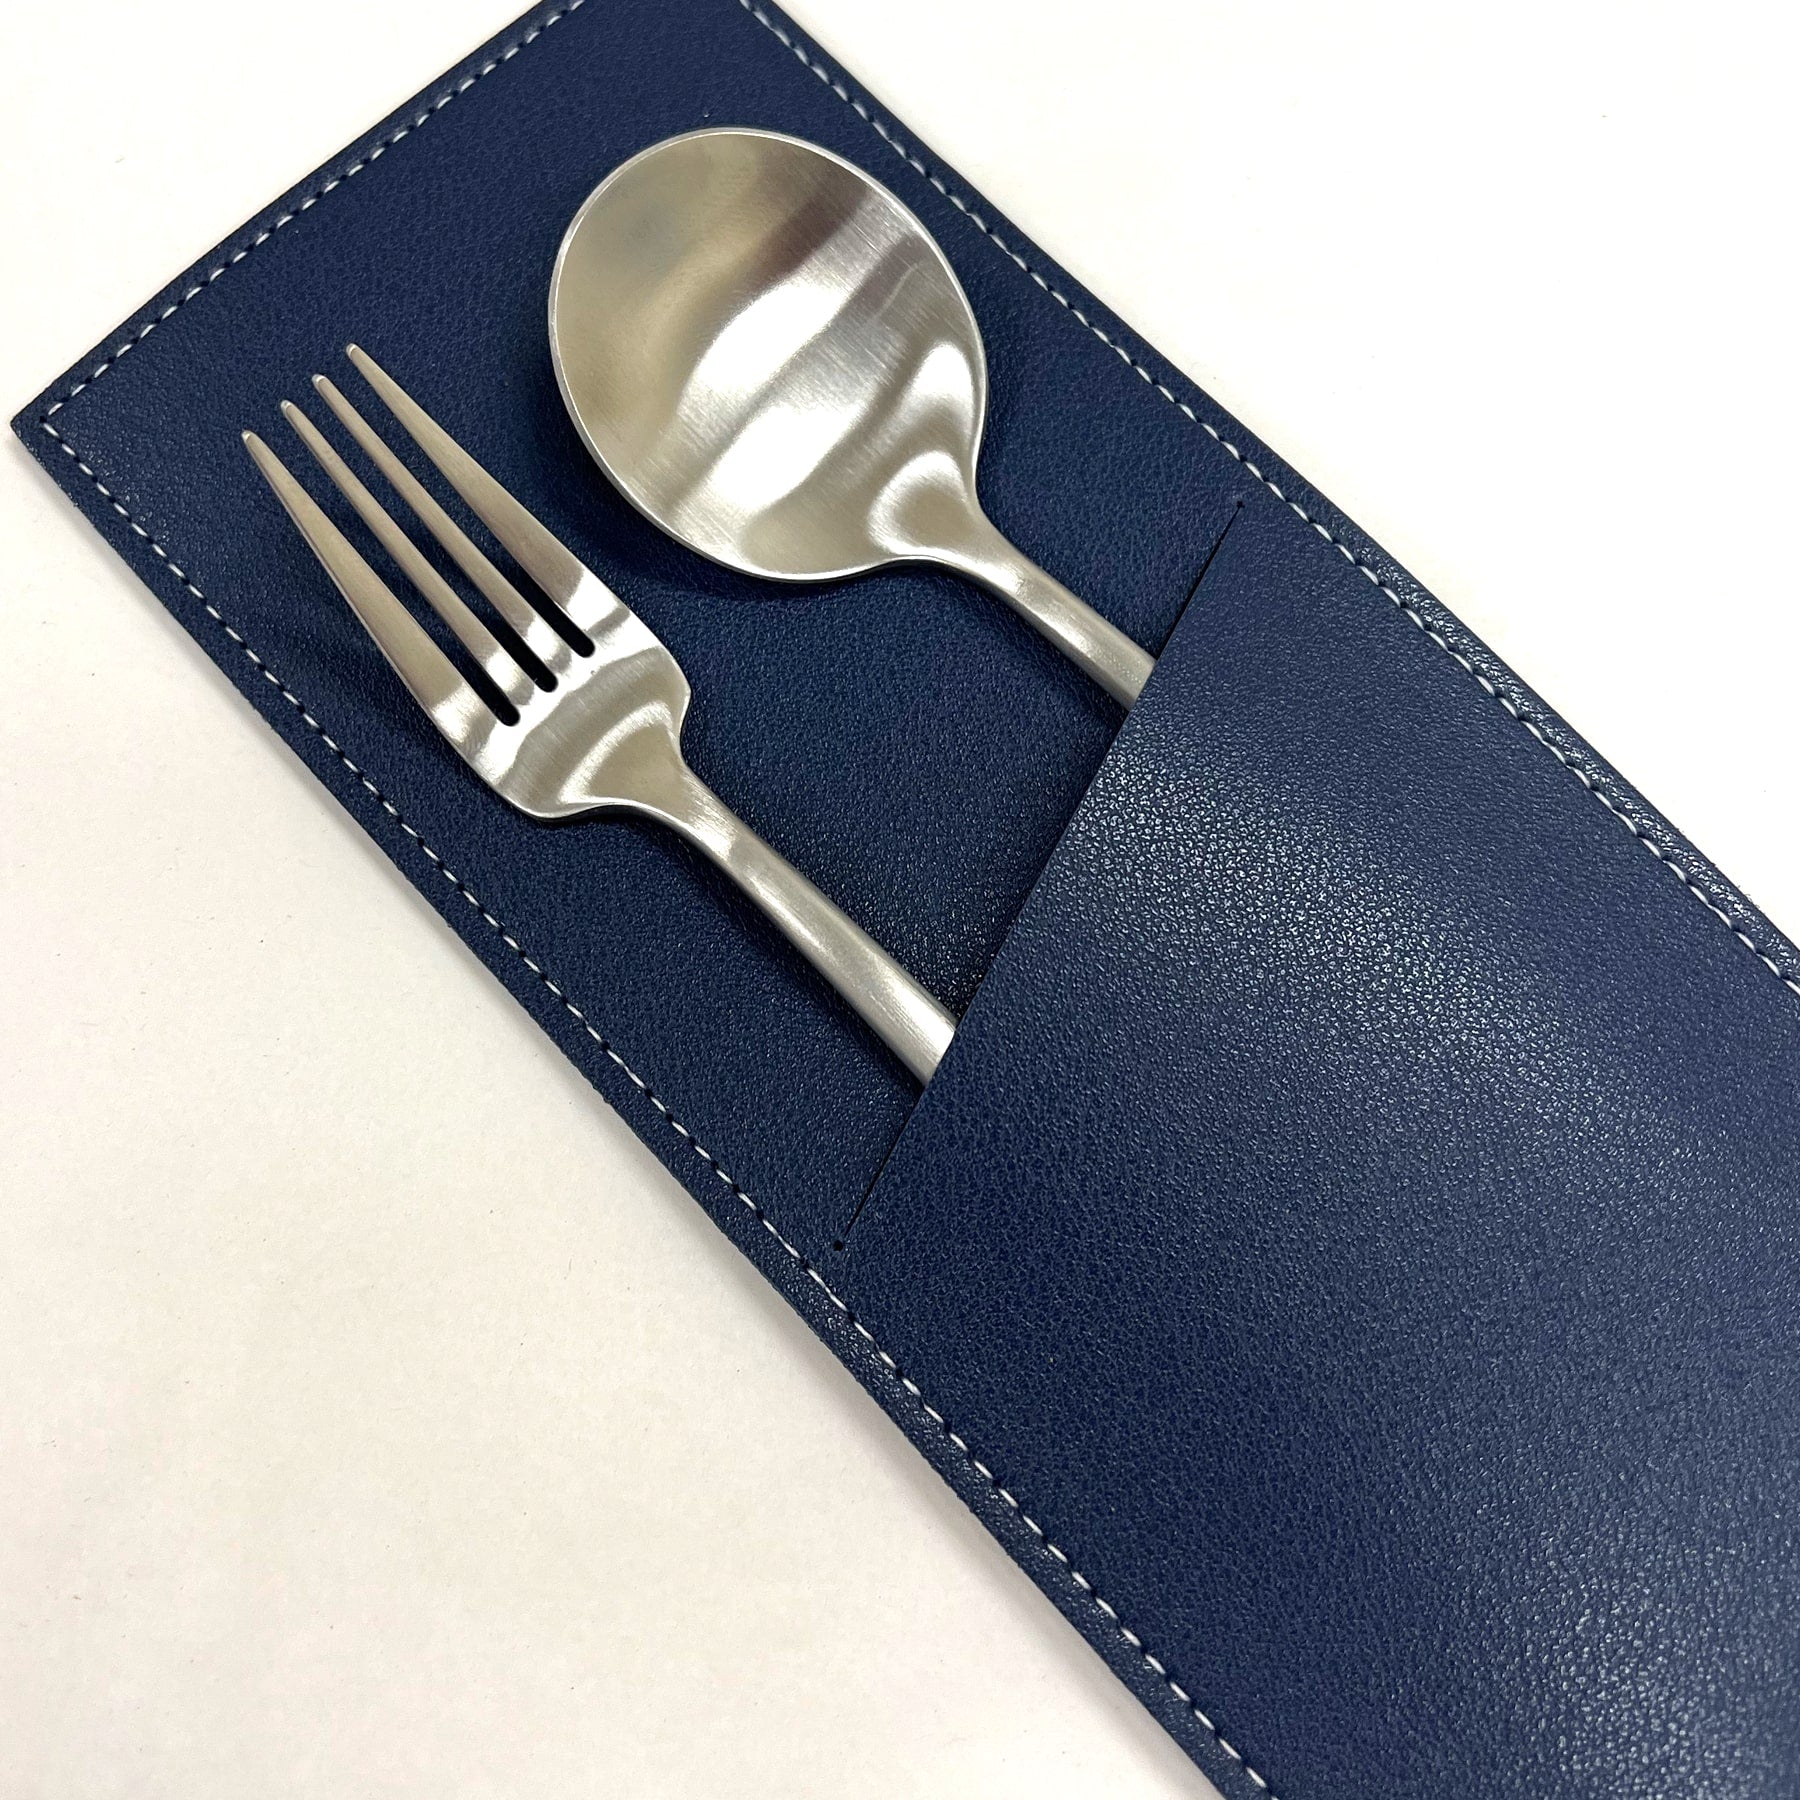 Sweden Cutlery Holder - Buy Tableware Online at FRANKY'S